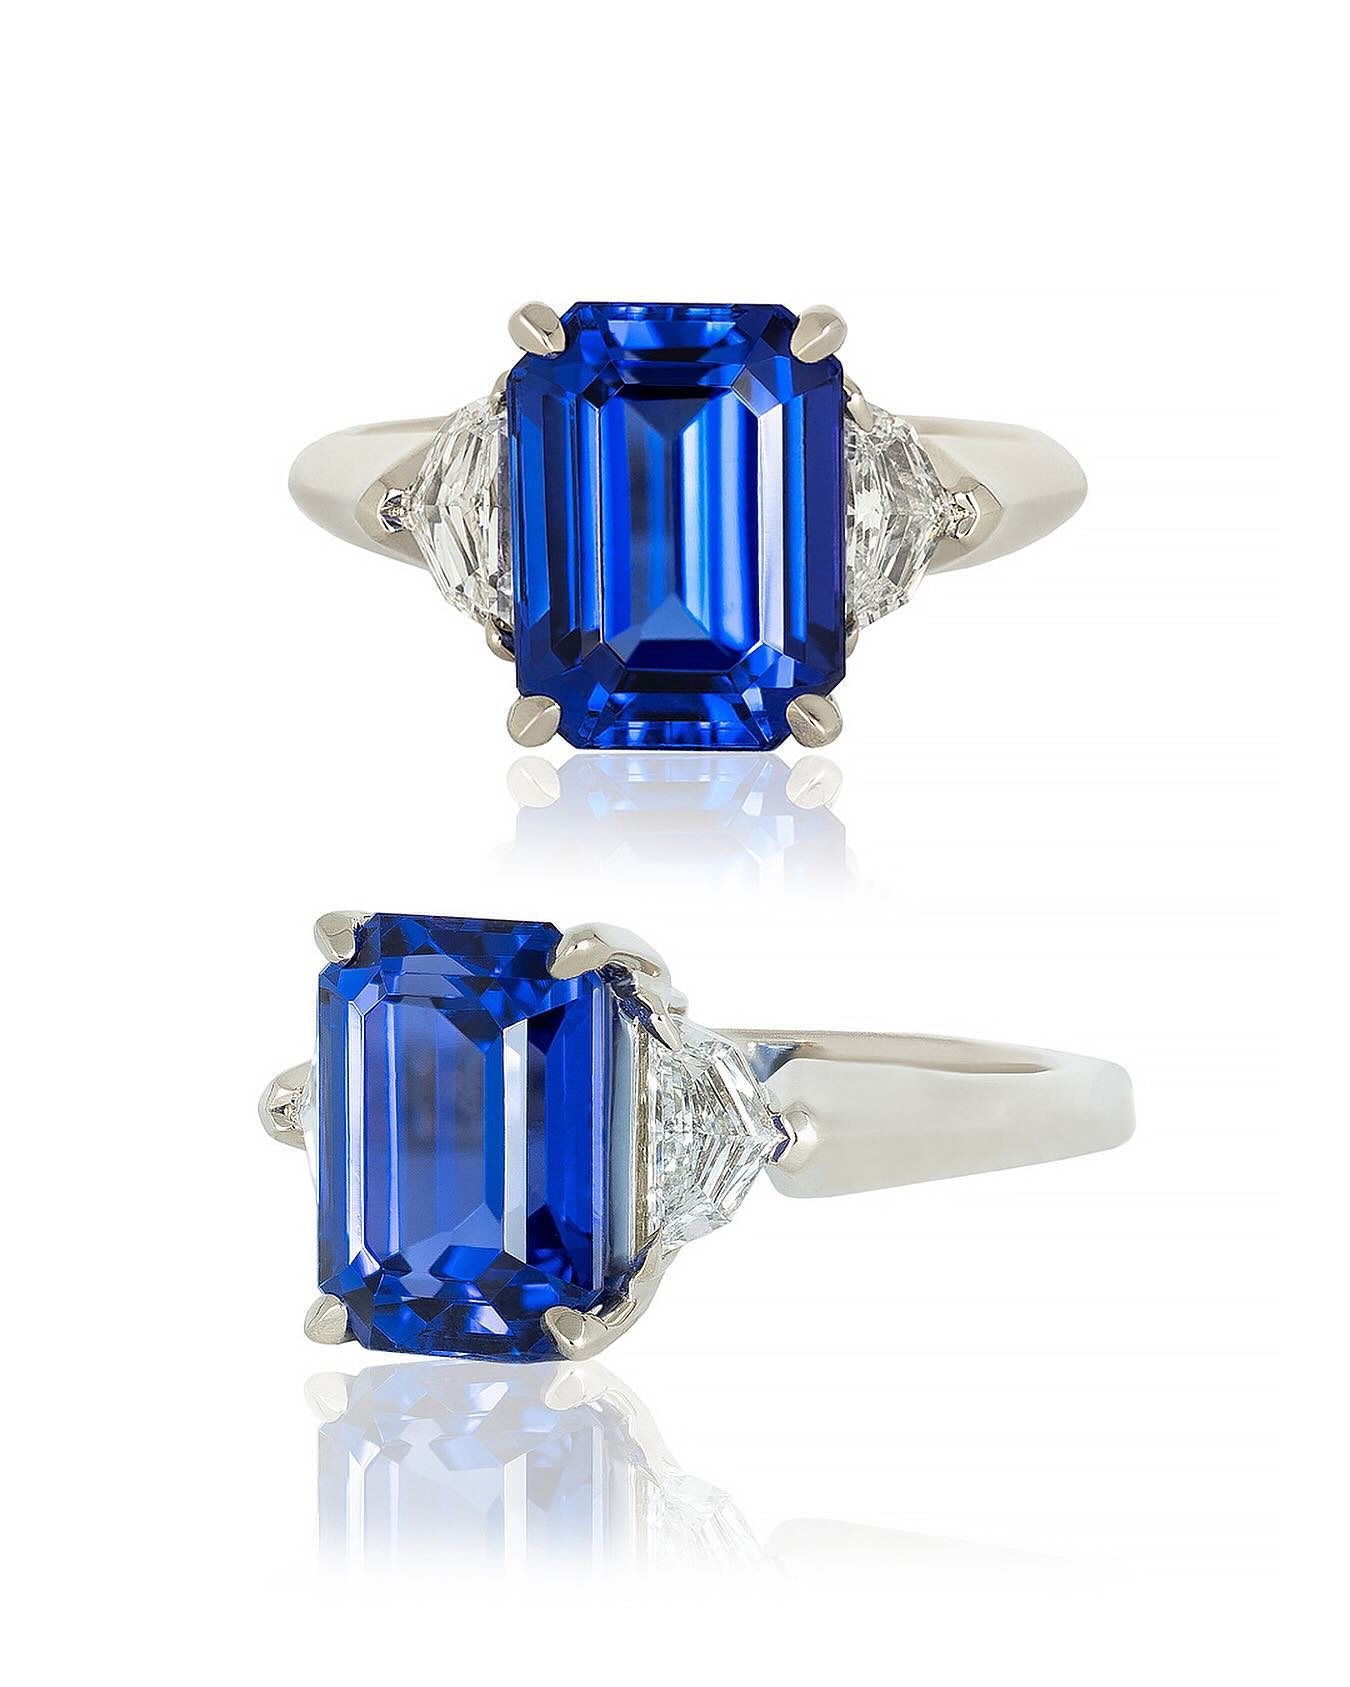 Tanzanite and Diamond Ring

Tanzanite : 4.1 ct - GIA Certification
Cadillac Cut Diamonds : .54 ctw - VS2 - D/E
14kt White Gold
$18,000

Big Island Jewelers
Fine Jewelry - Made by Hand